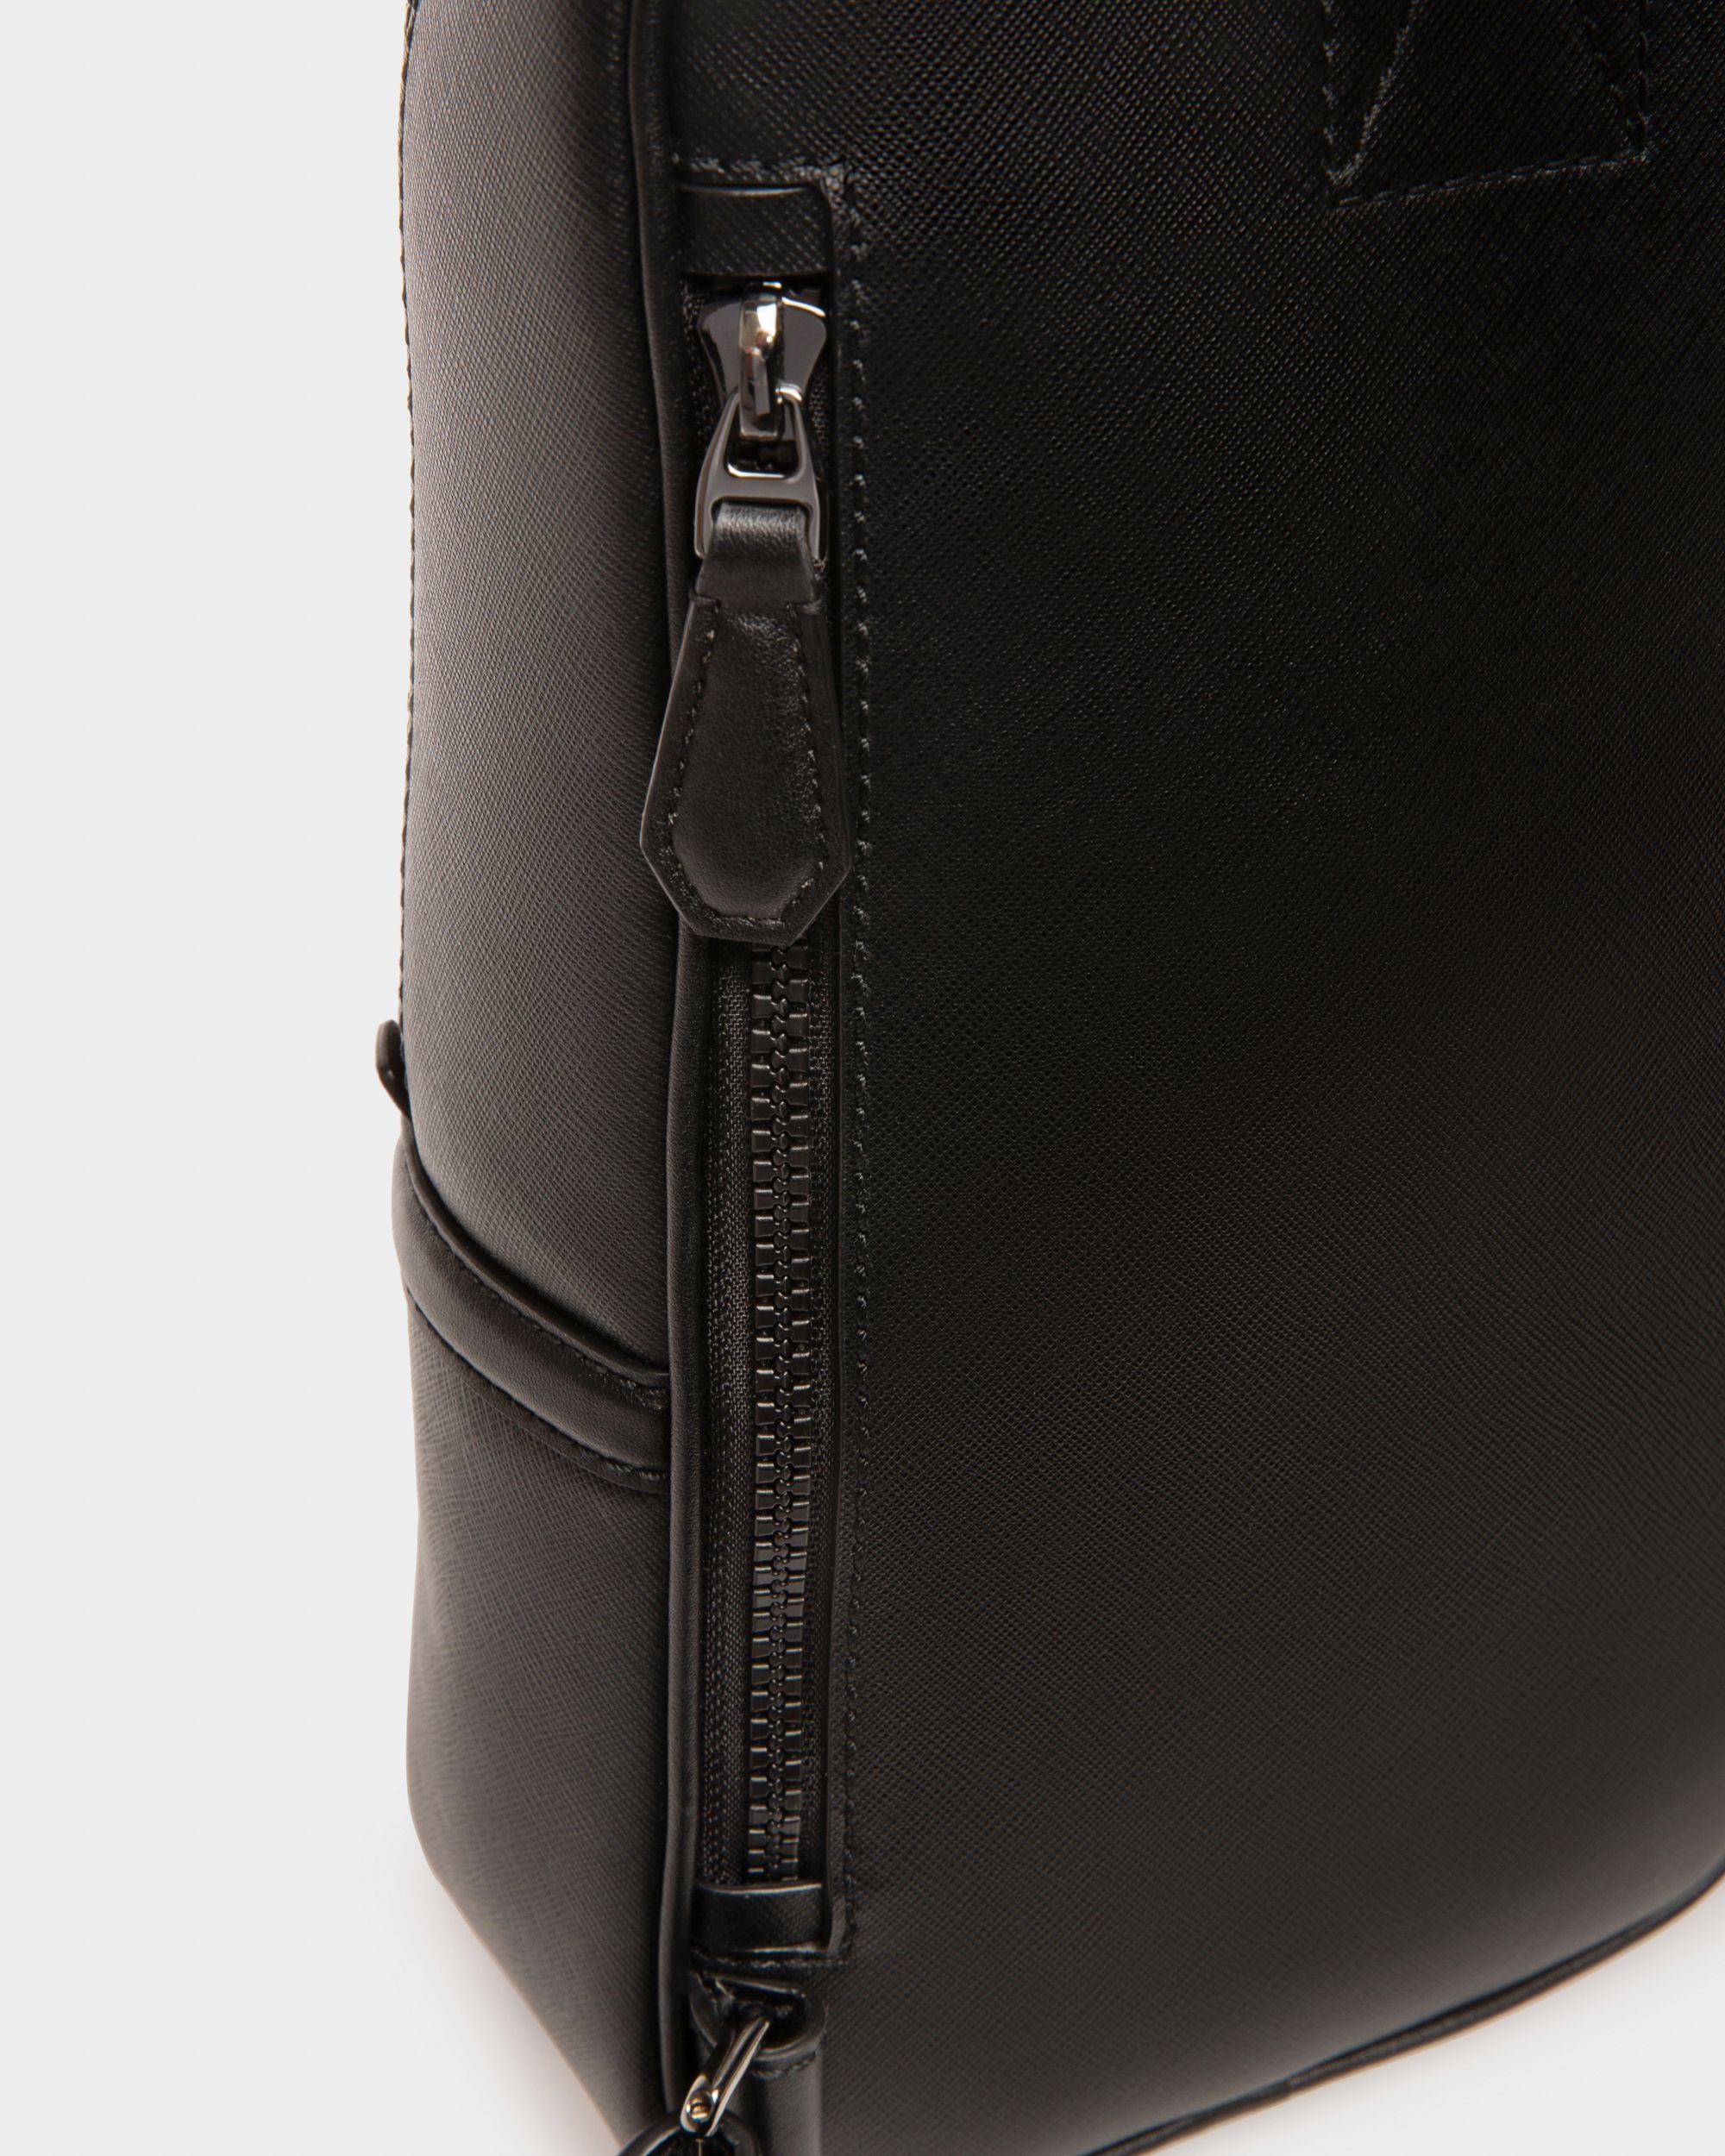 Malikho | Men's Sling Bag | Recycled Black Leather | Bally | Still Life Detail